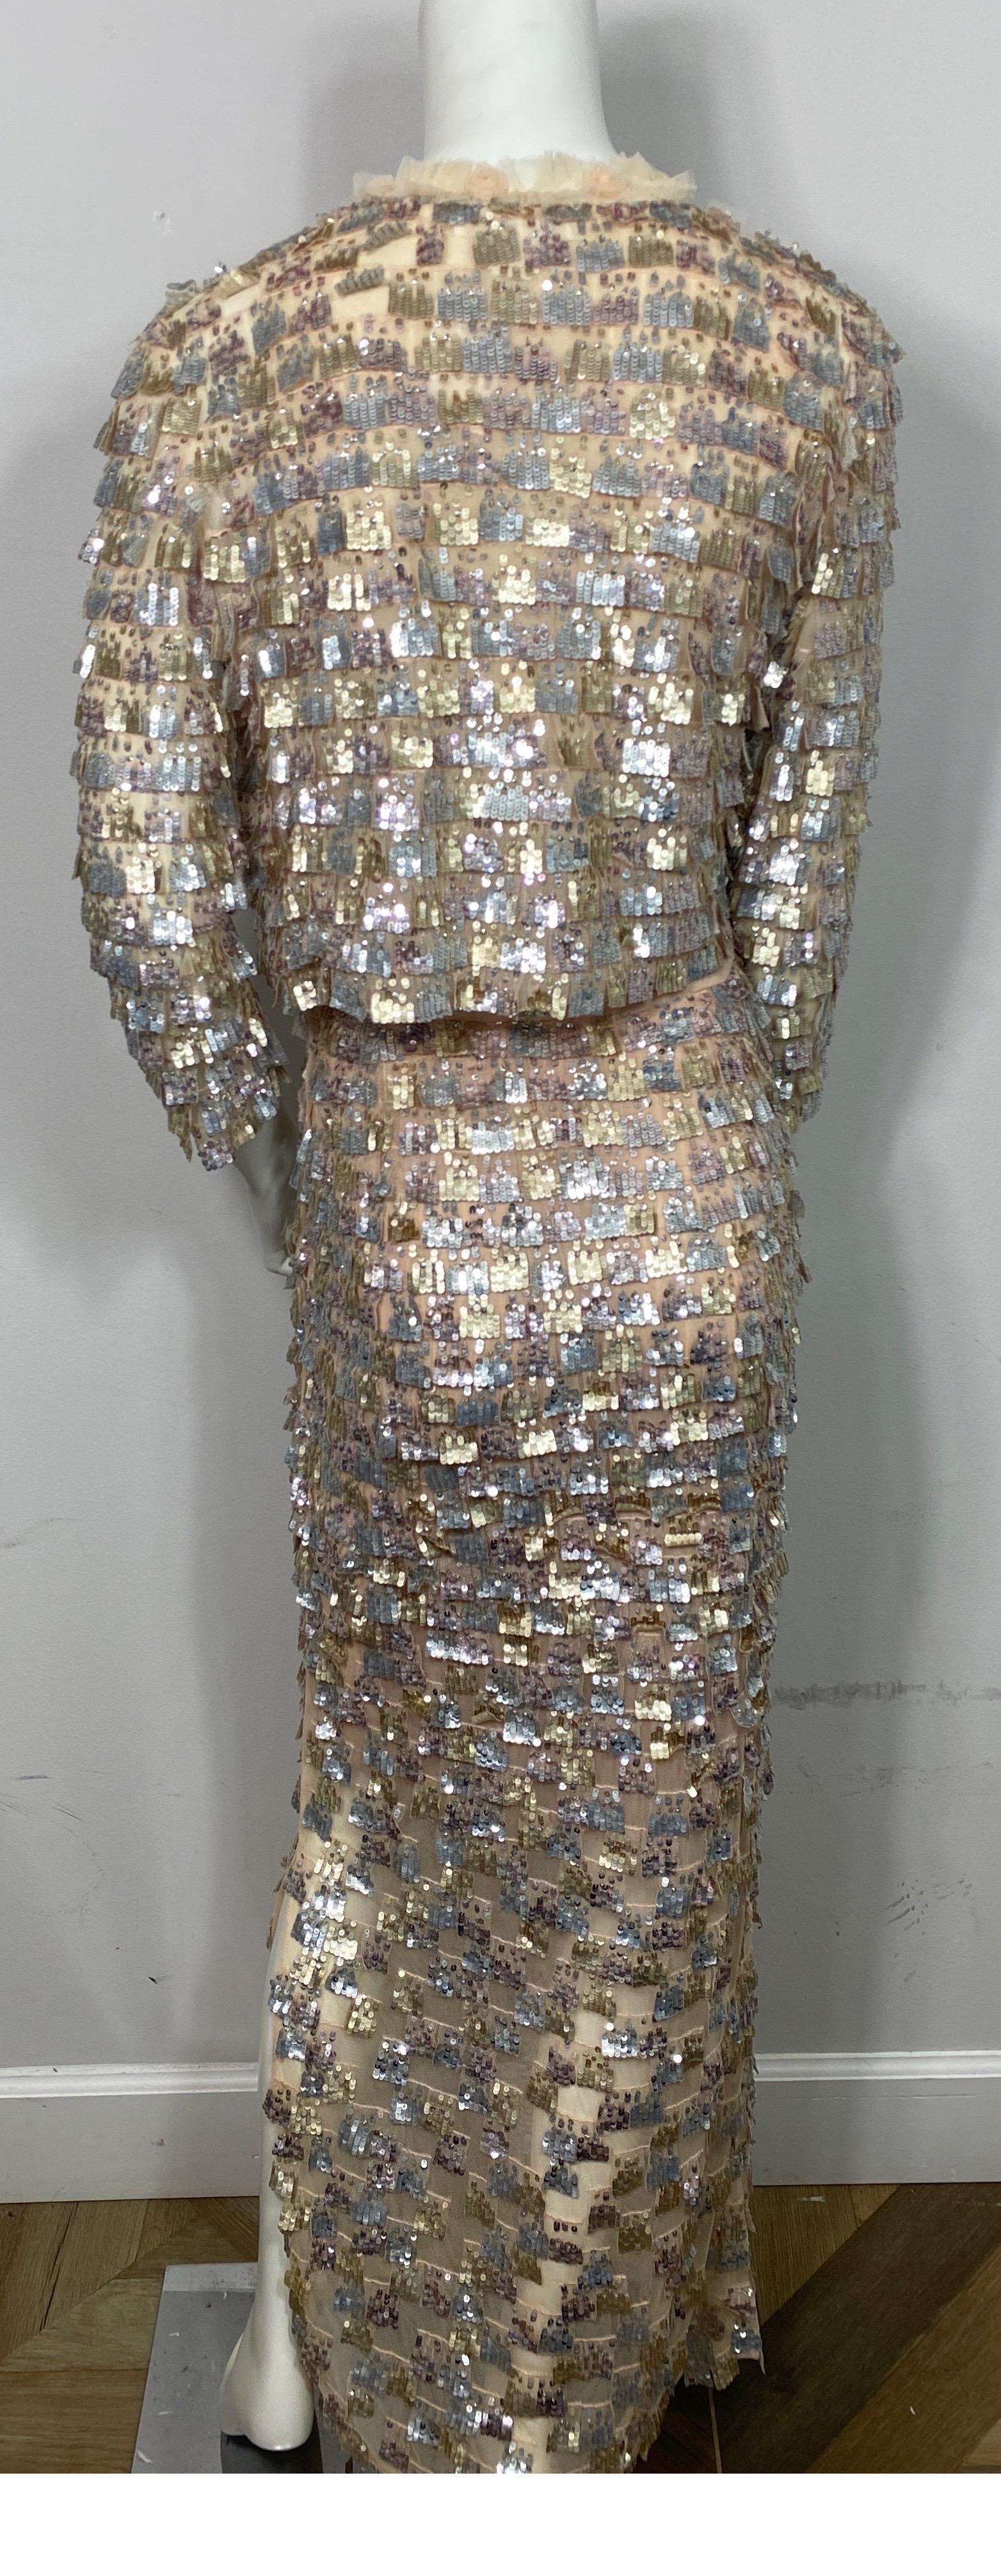 Oscar de la Renta Early 2000’s Nude and Metallic Gown with Jacket-Size 4 8